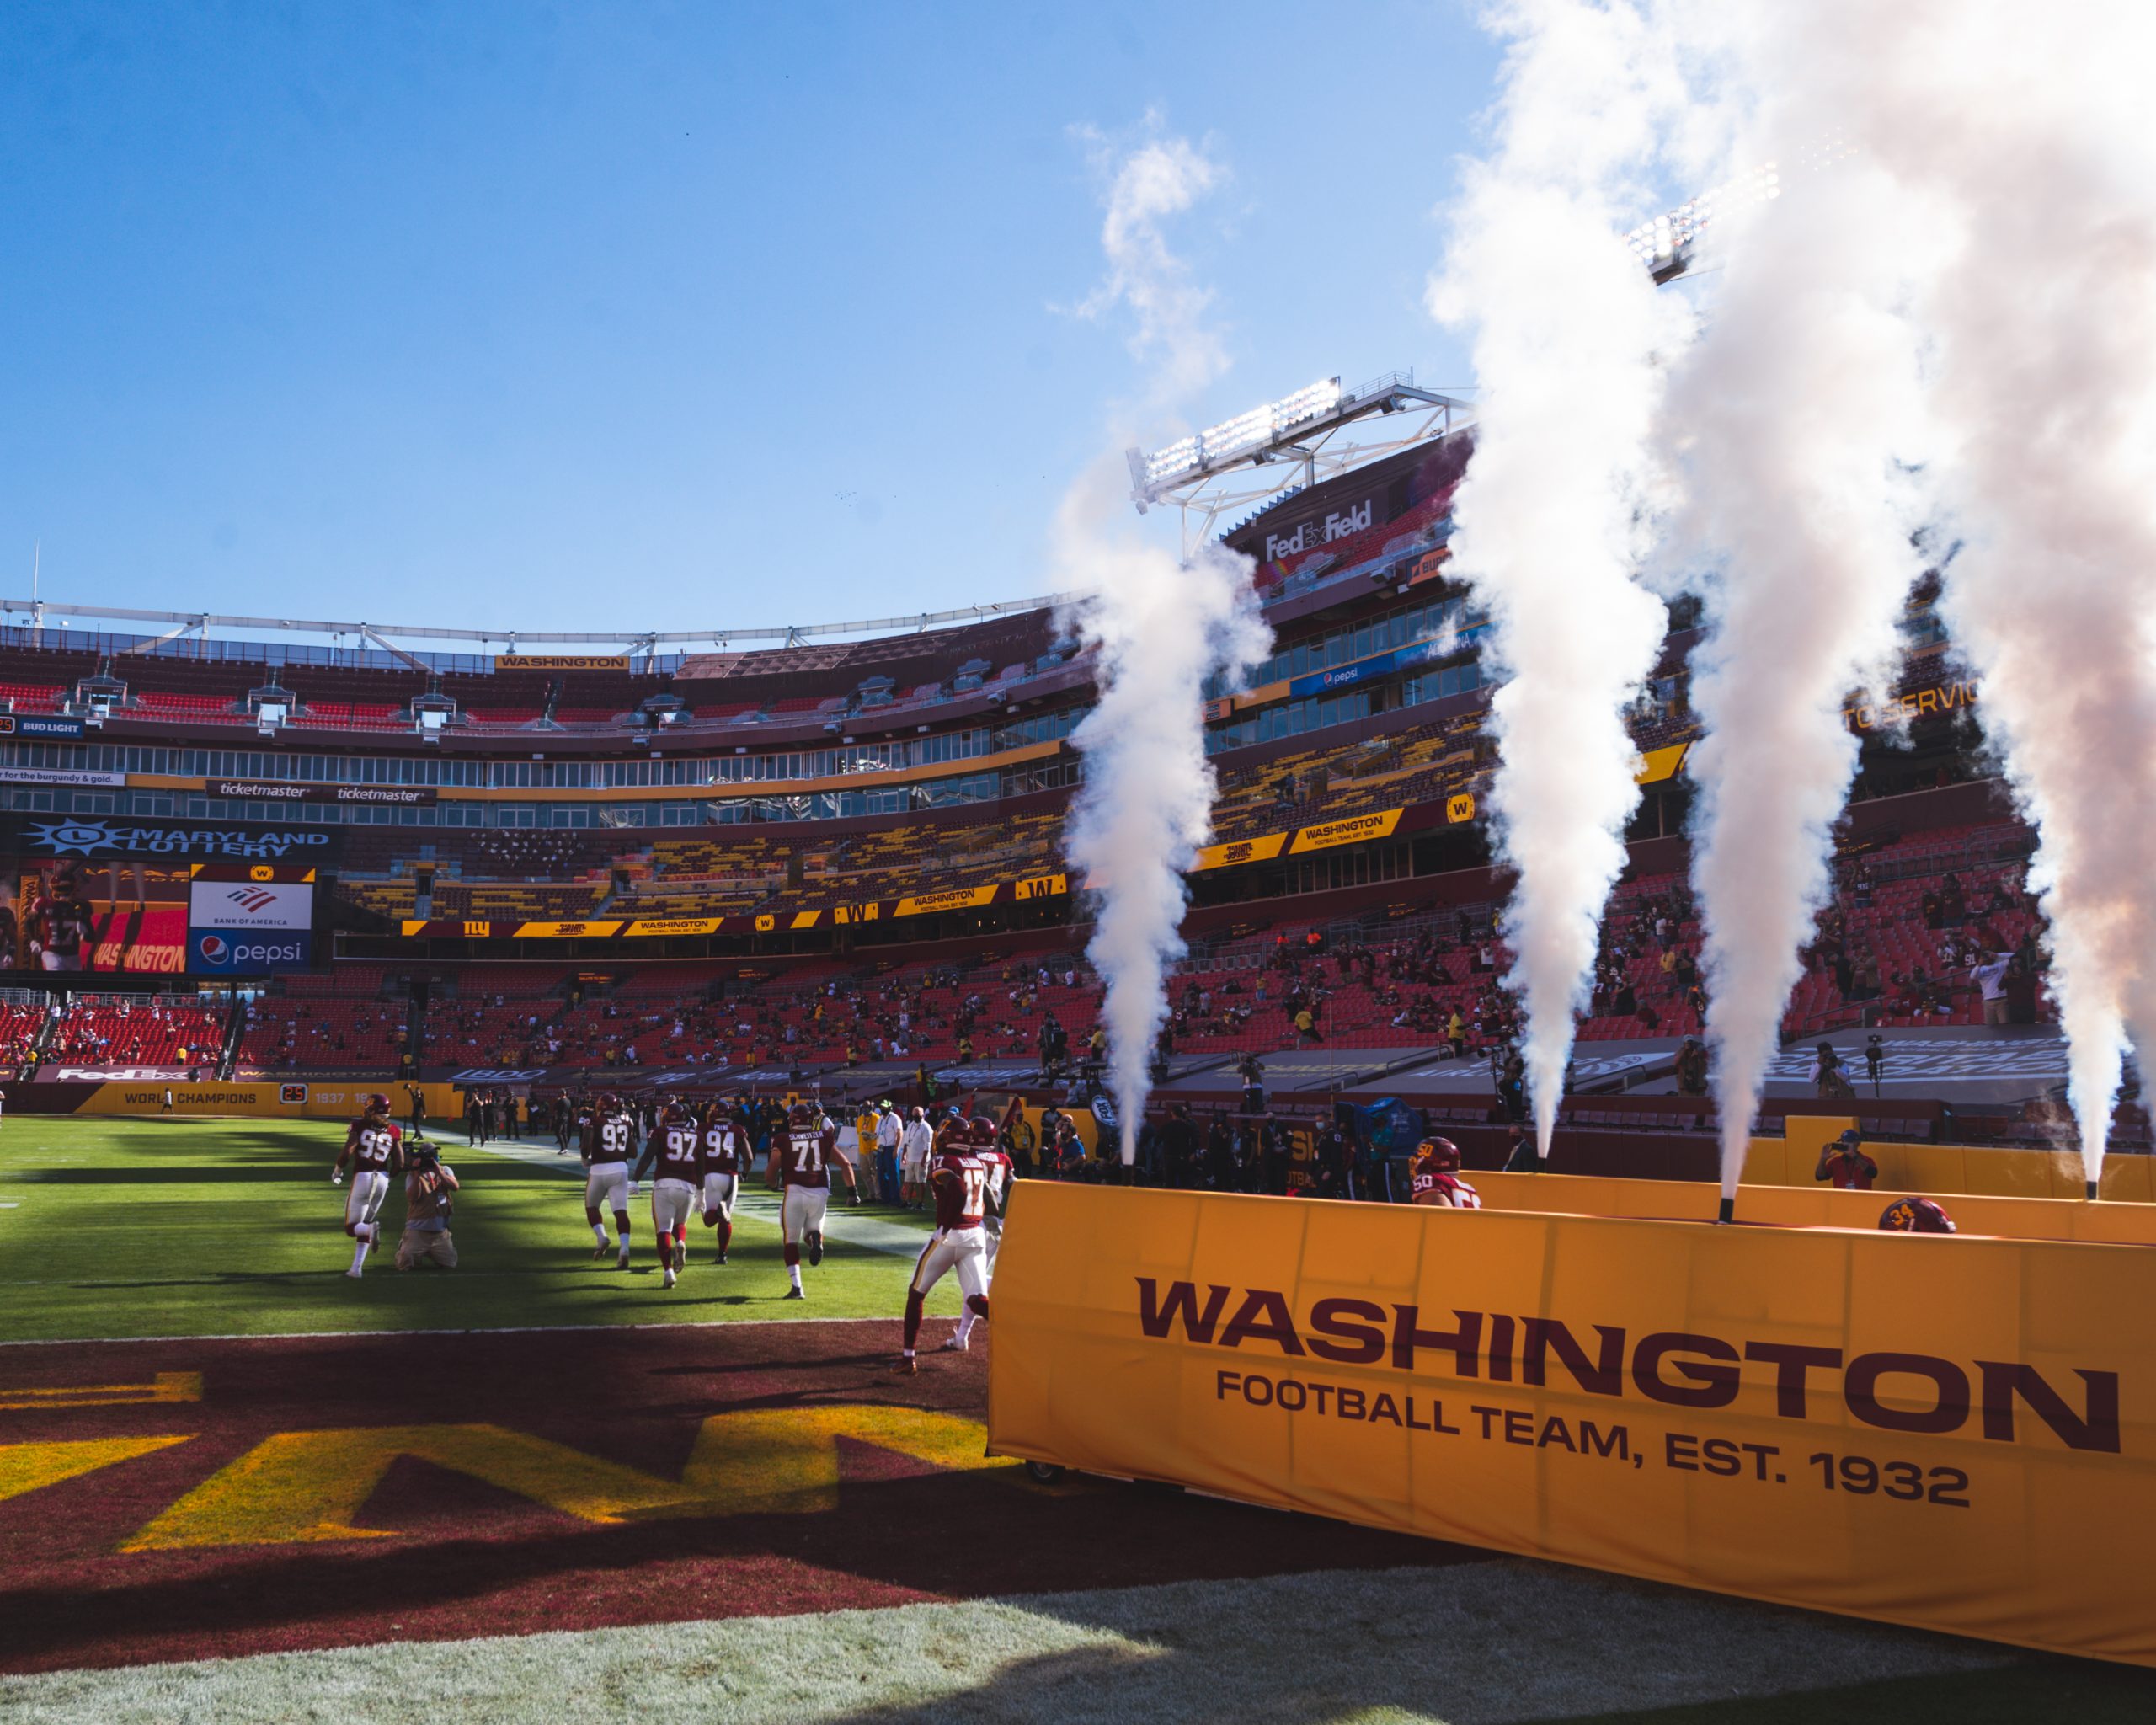 Washington Football Team recruiting for fan ambassador network